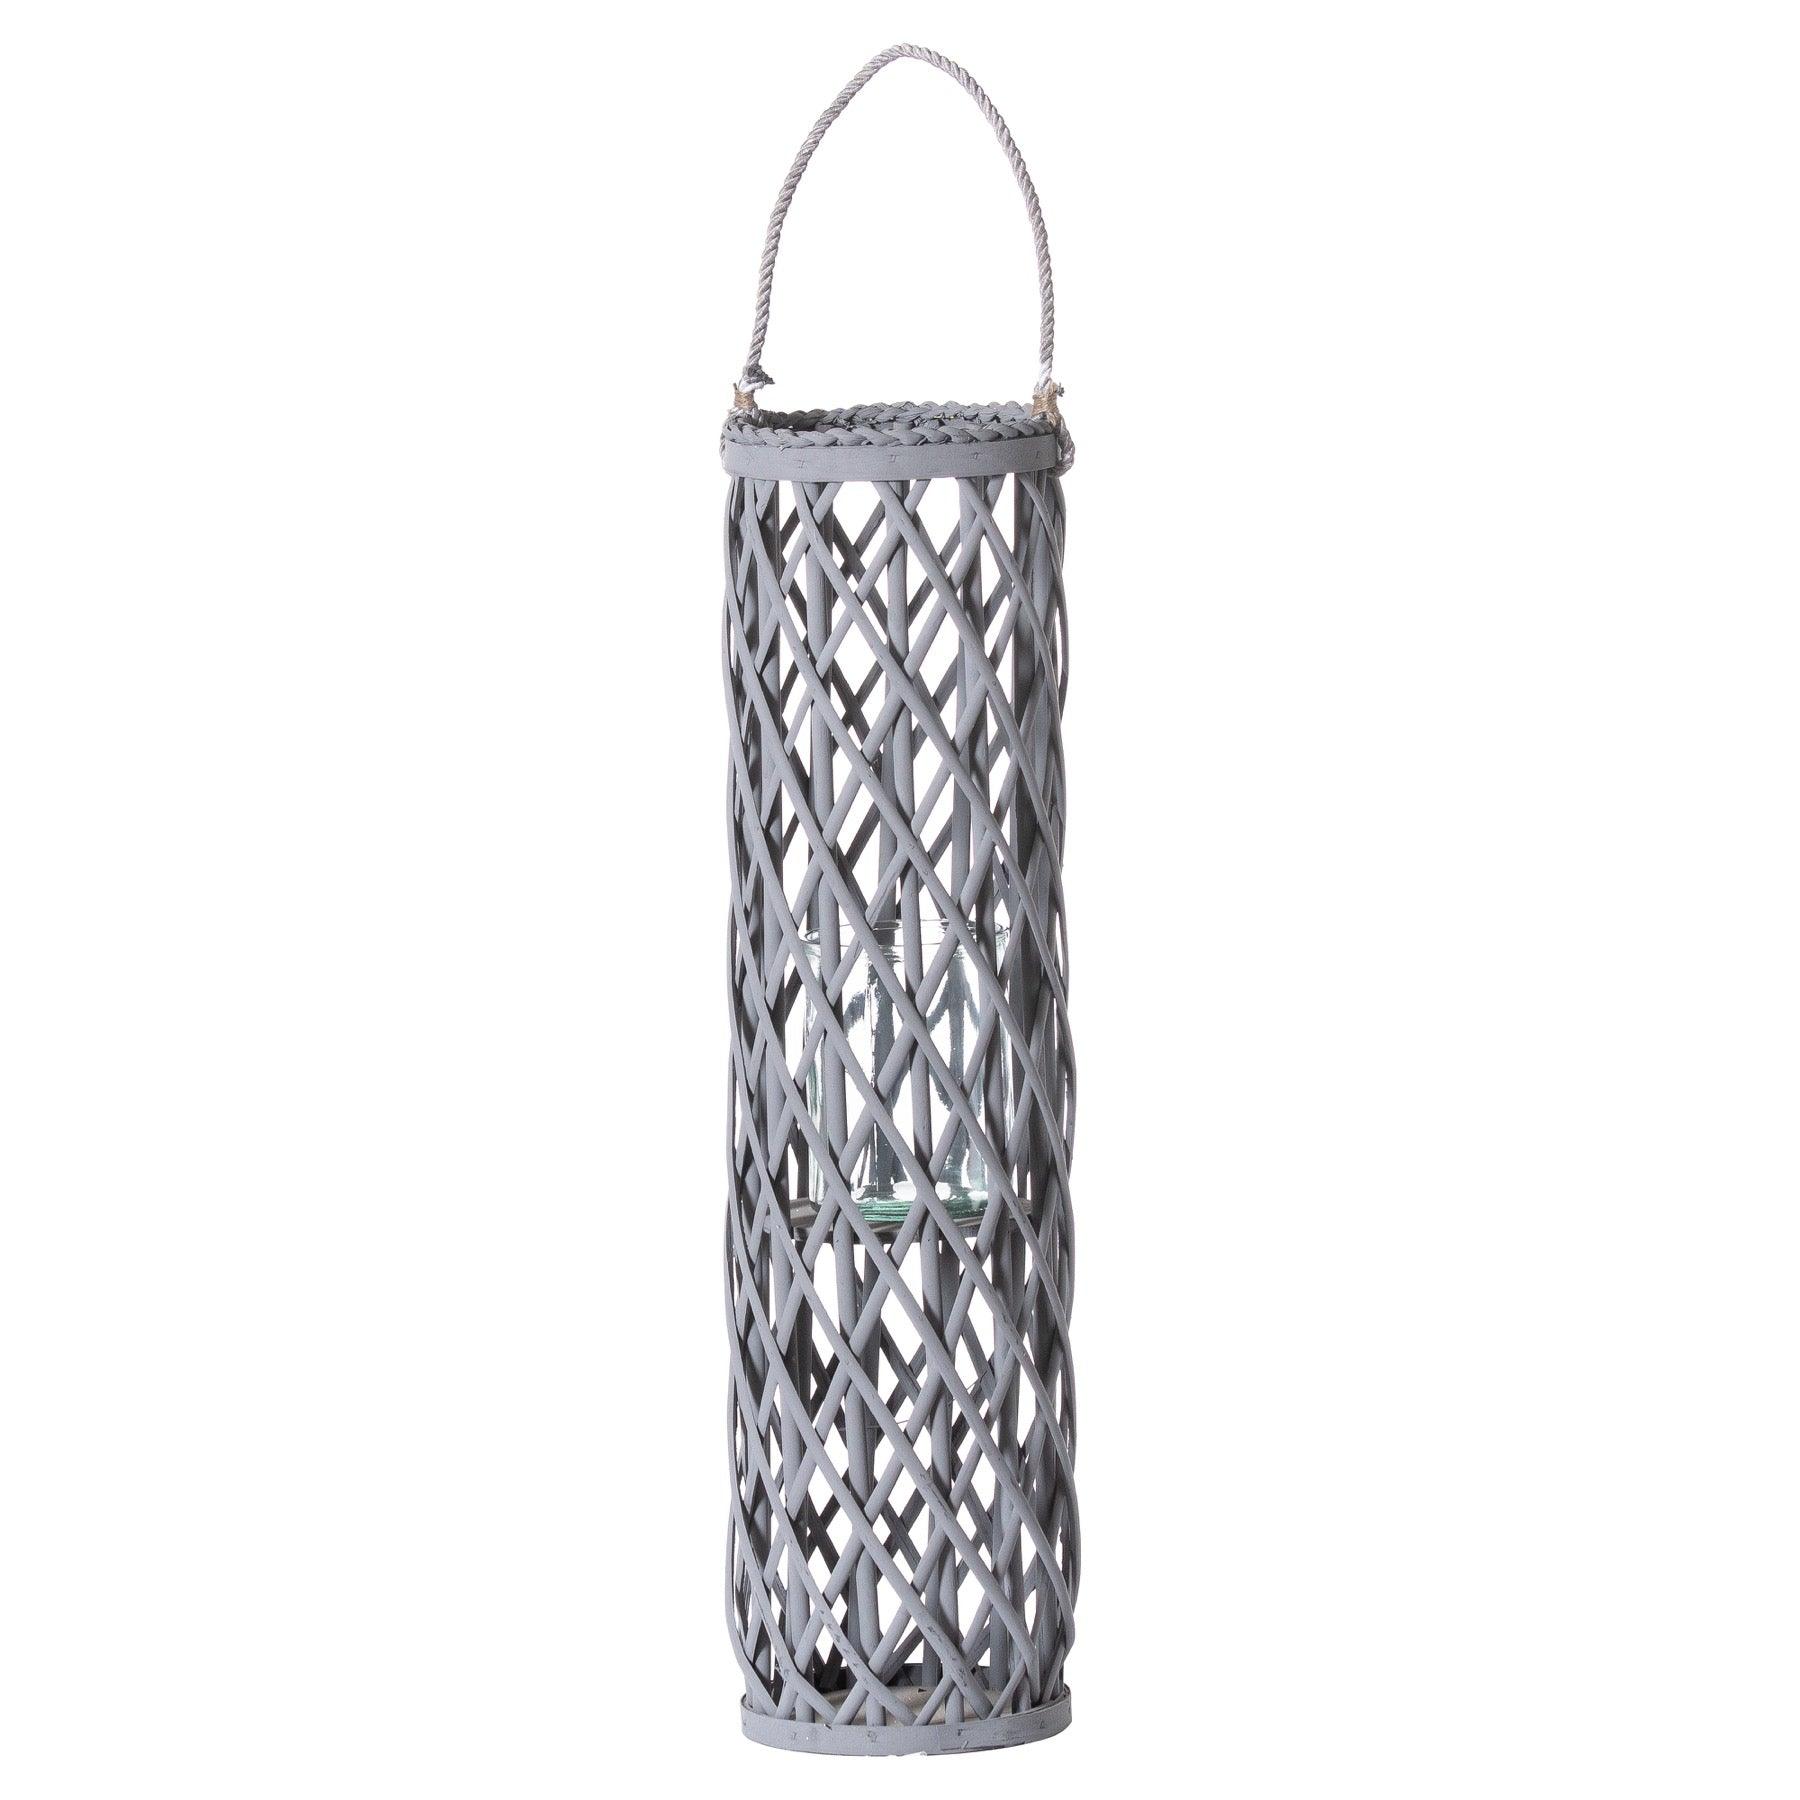 Large Grey Wicker Lantern With Glass Hurricane - £64.95 - Lighting > Lanterns 